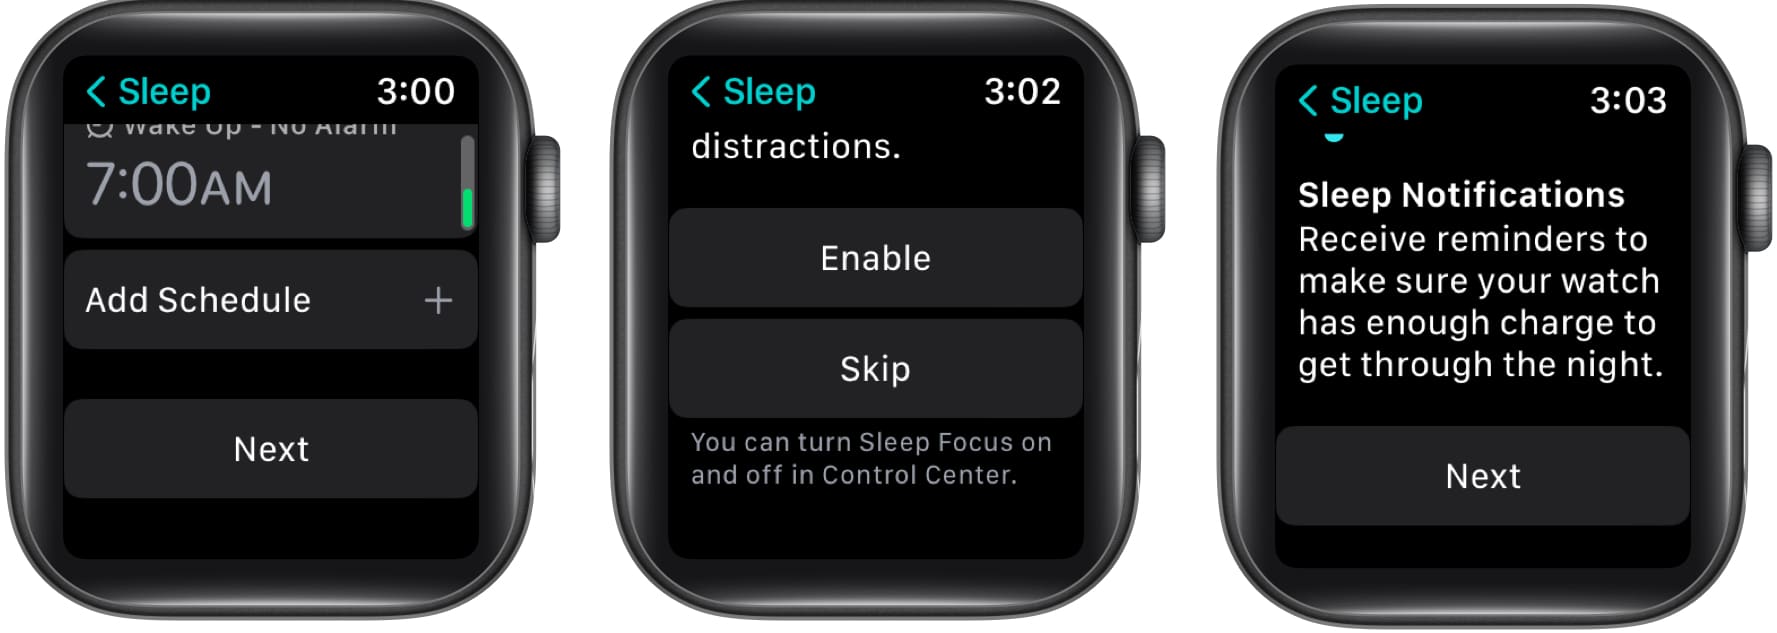 Tap Next in the Sleep app on Apple Watch